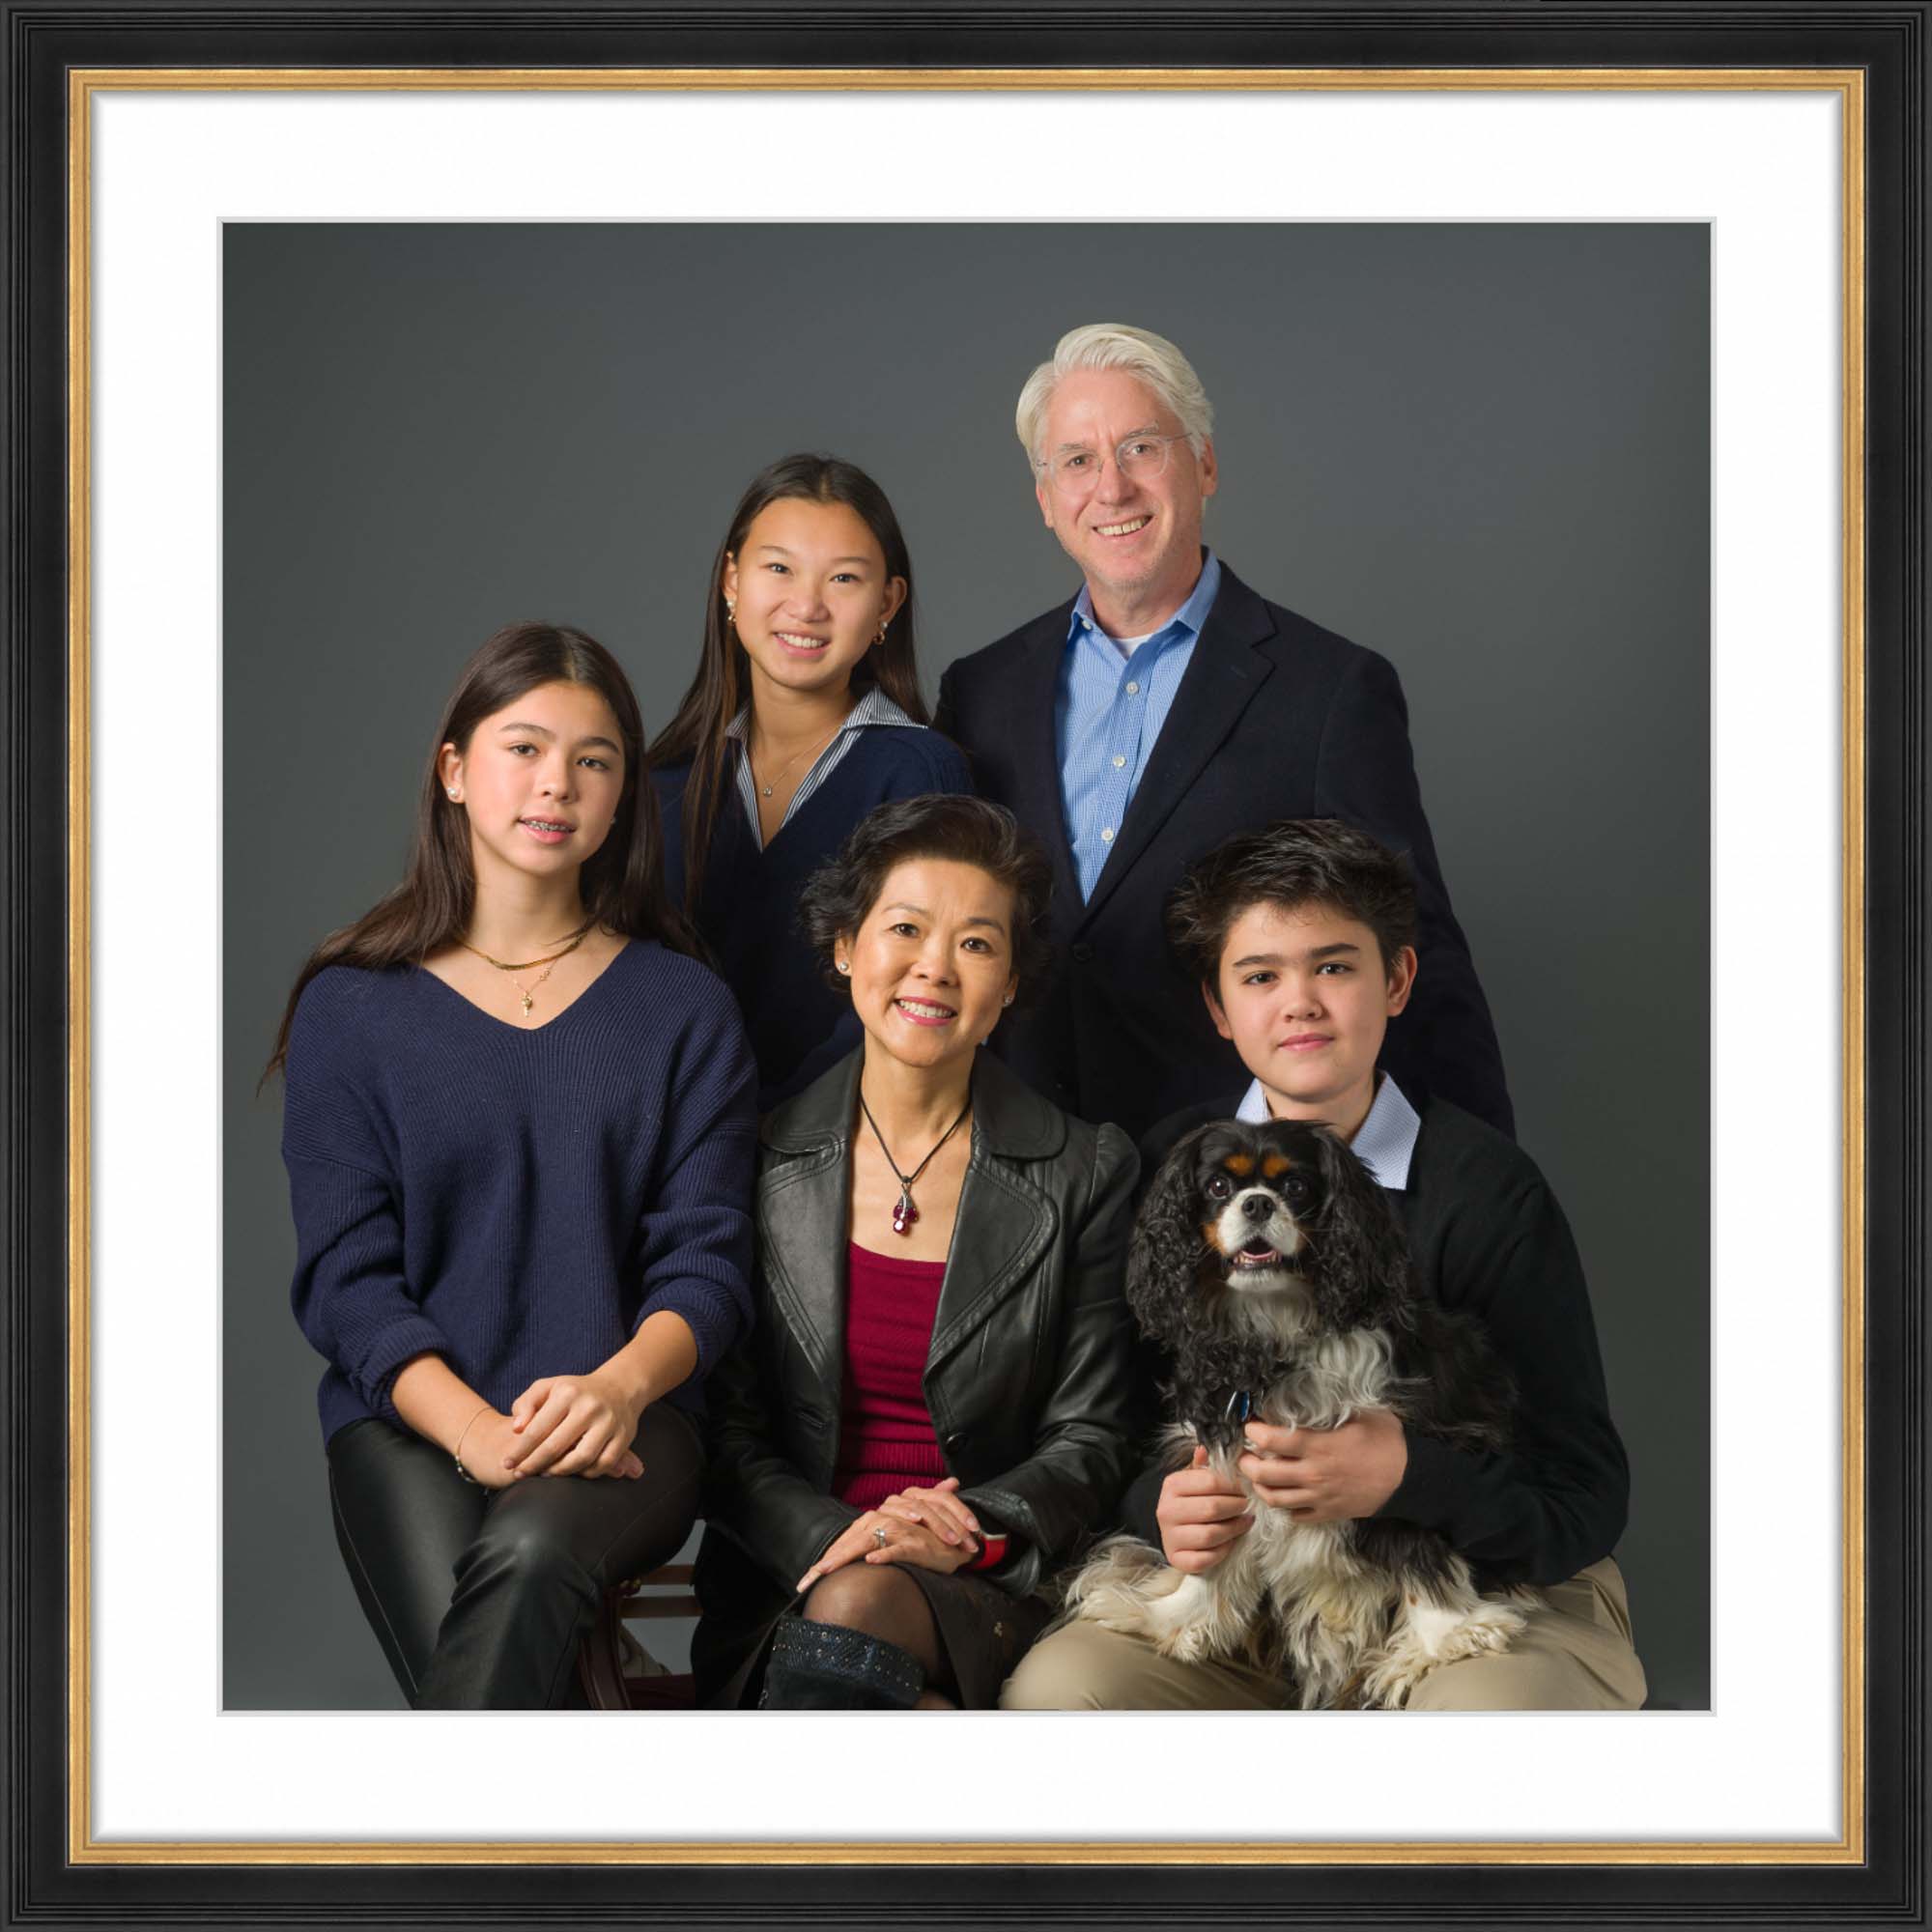 family portrait in elegant black and gold frame